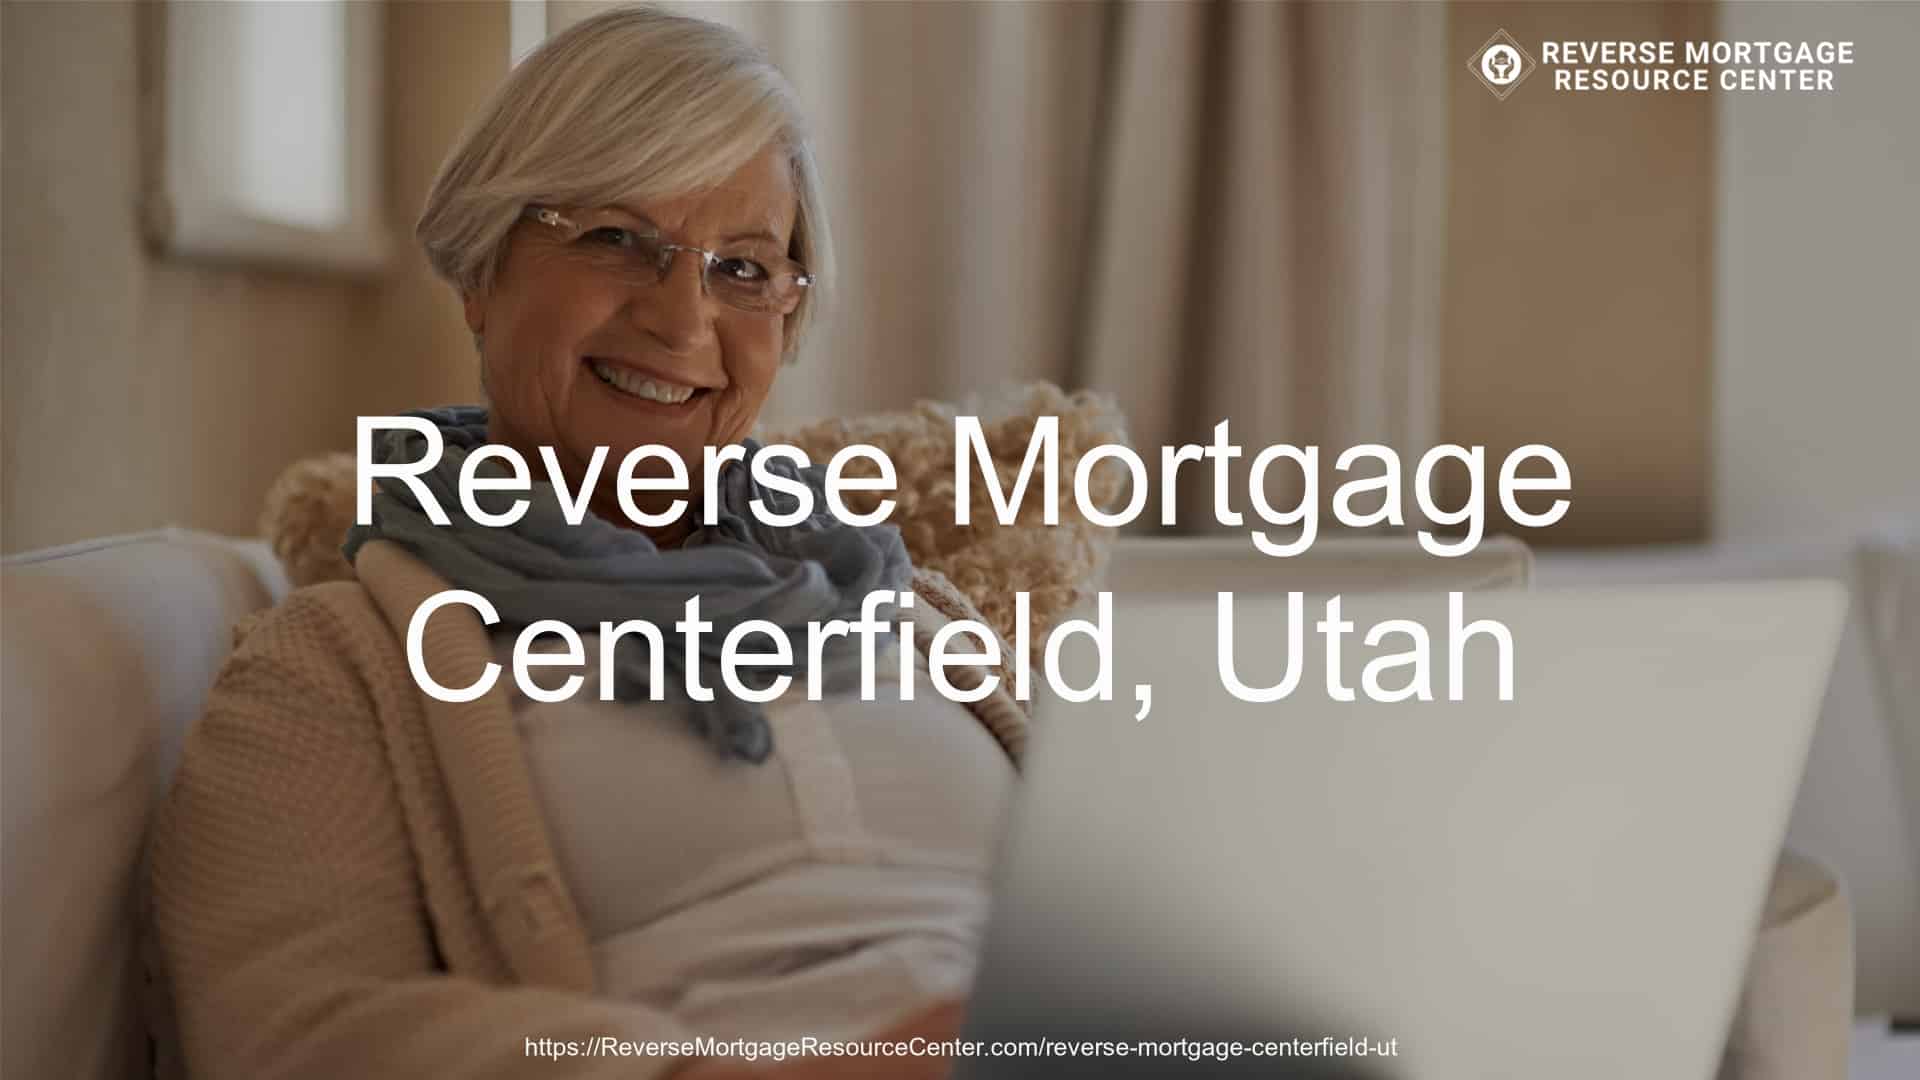 Reverse Mortgage Loans in Centerfield Utah